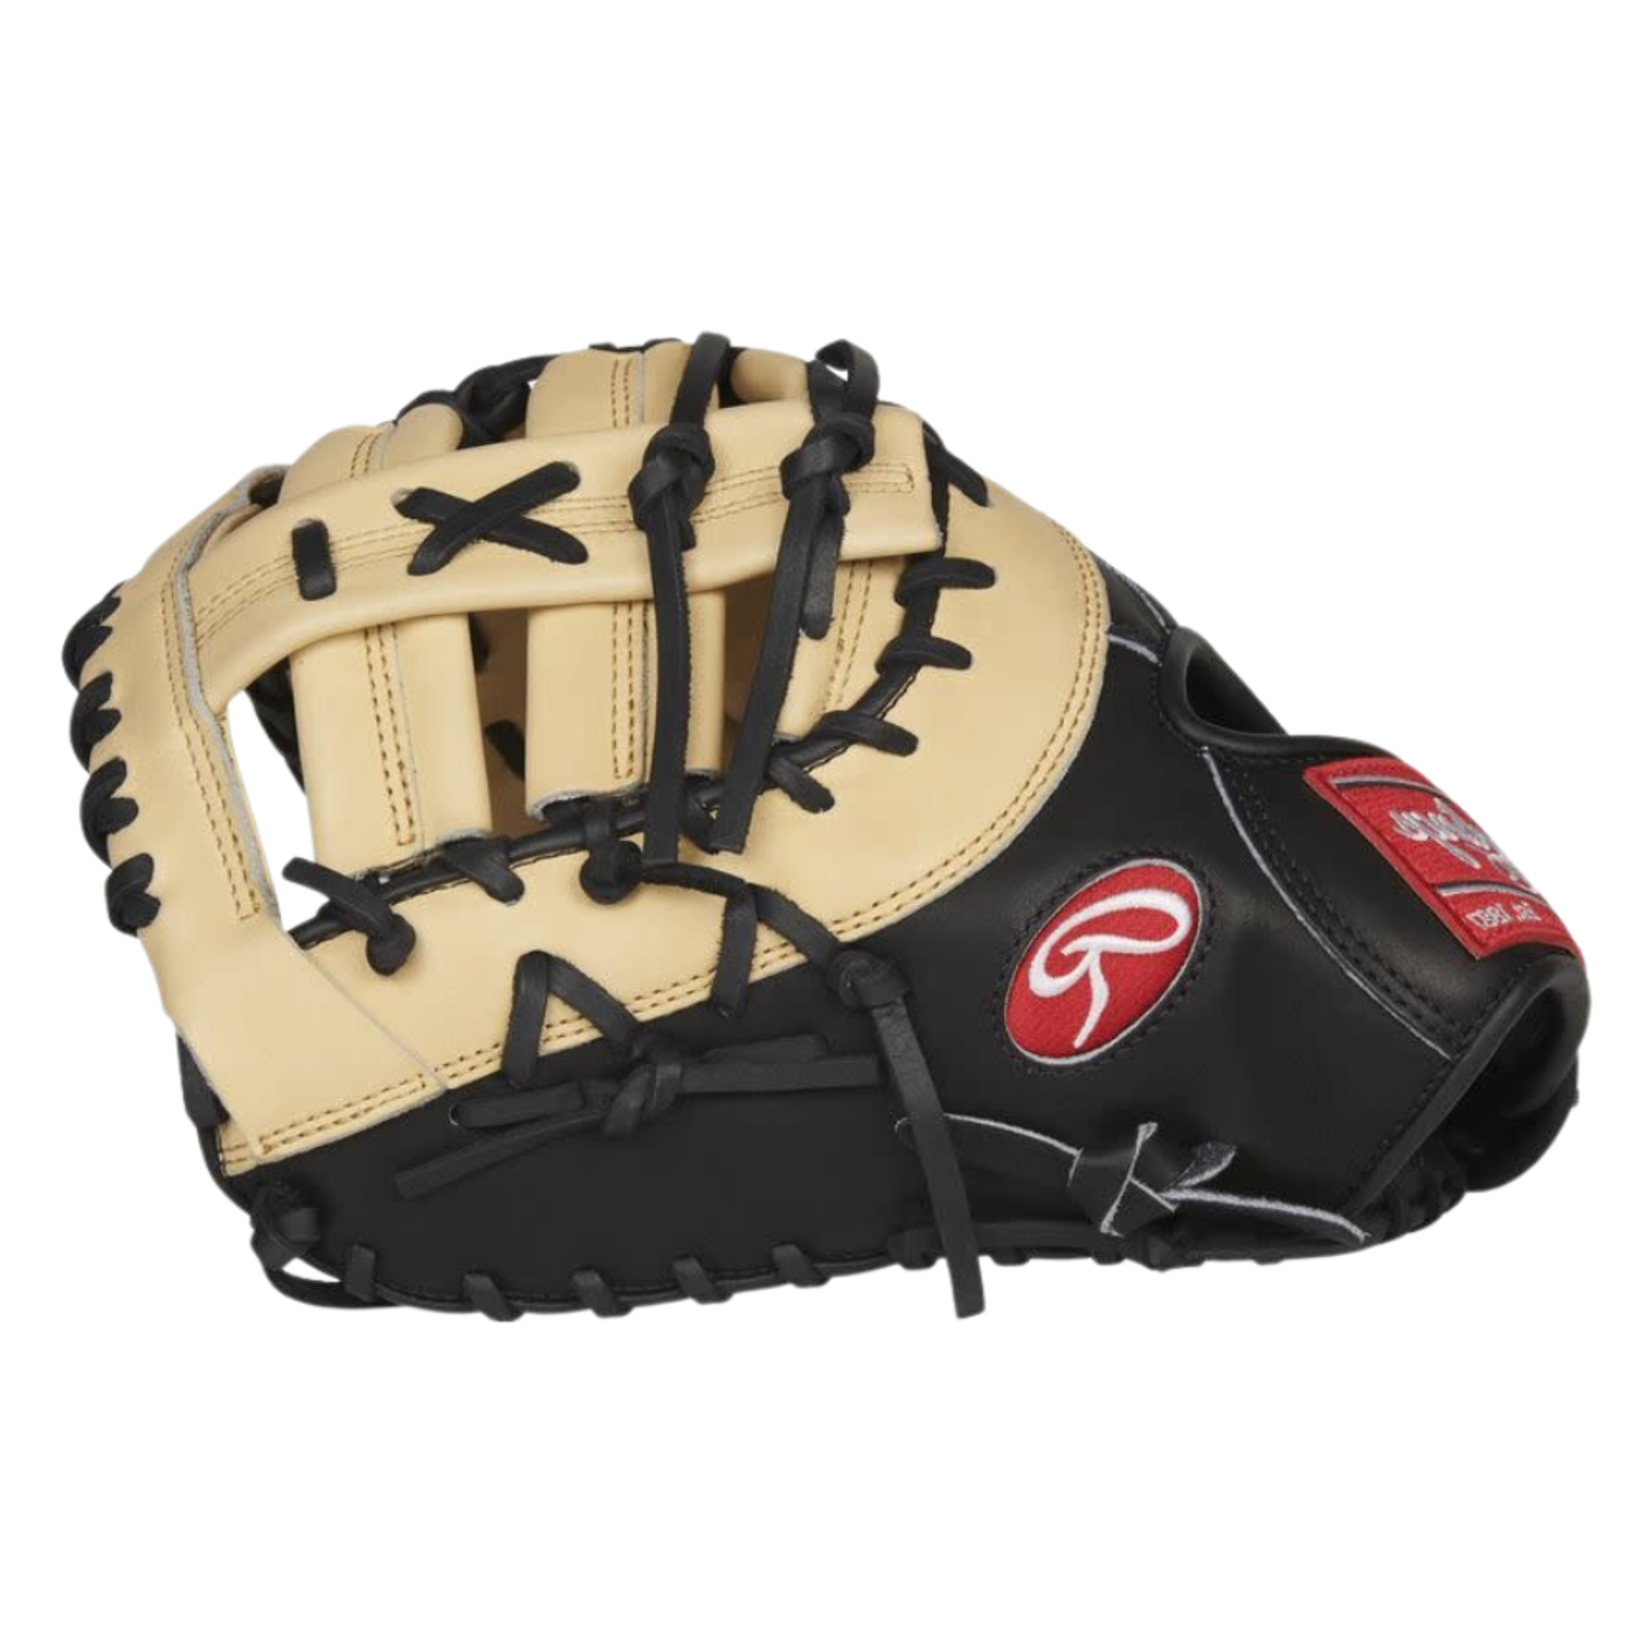 Rawlings Rawlings Baseball Glove, Heart of the Hide PRODCTCB, 13”, Full Right, First Base Mitt